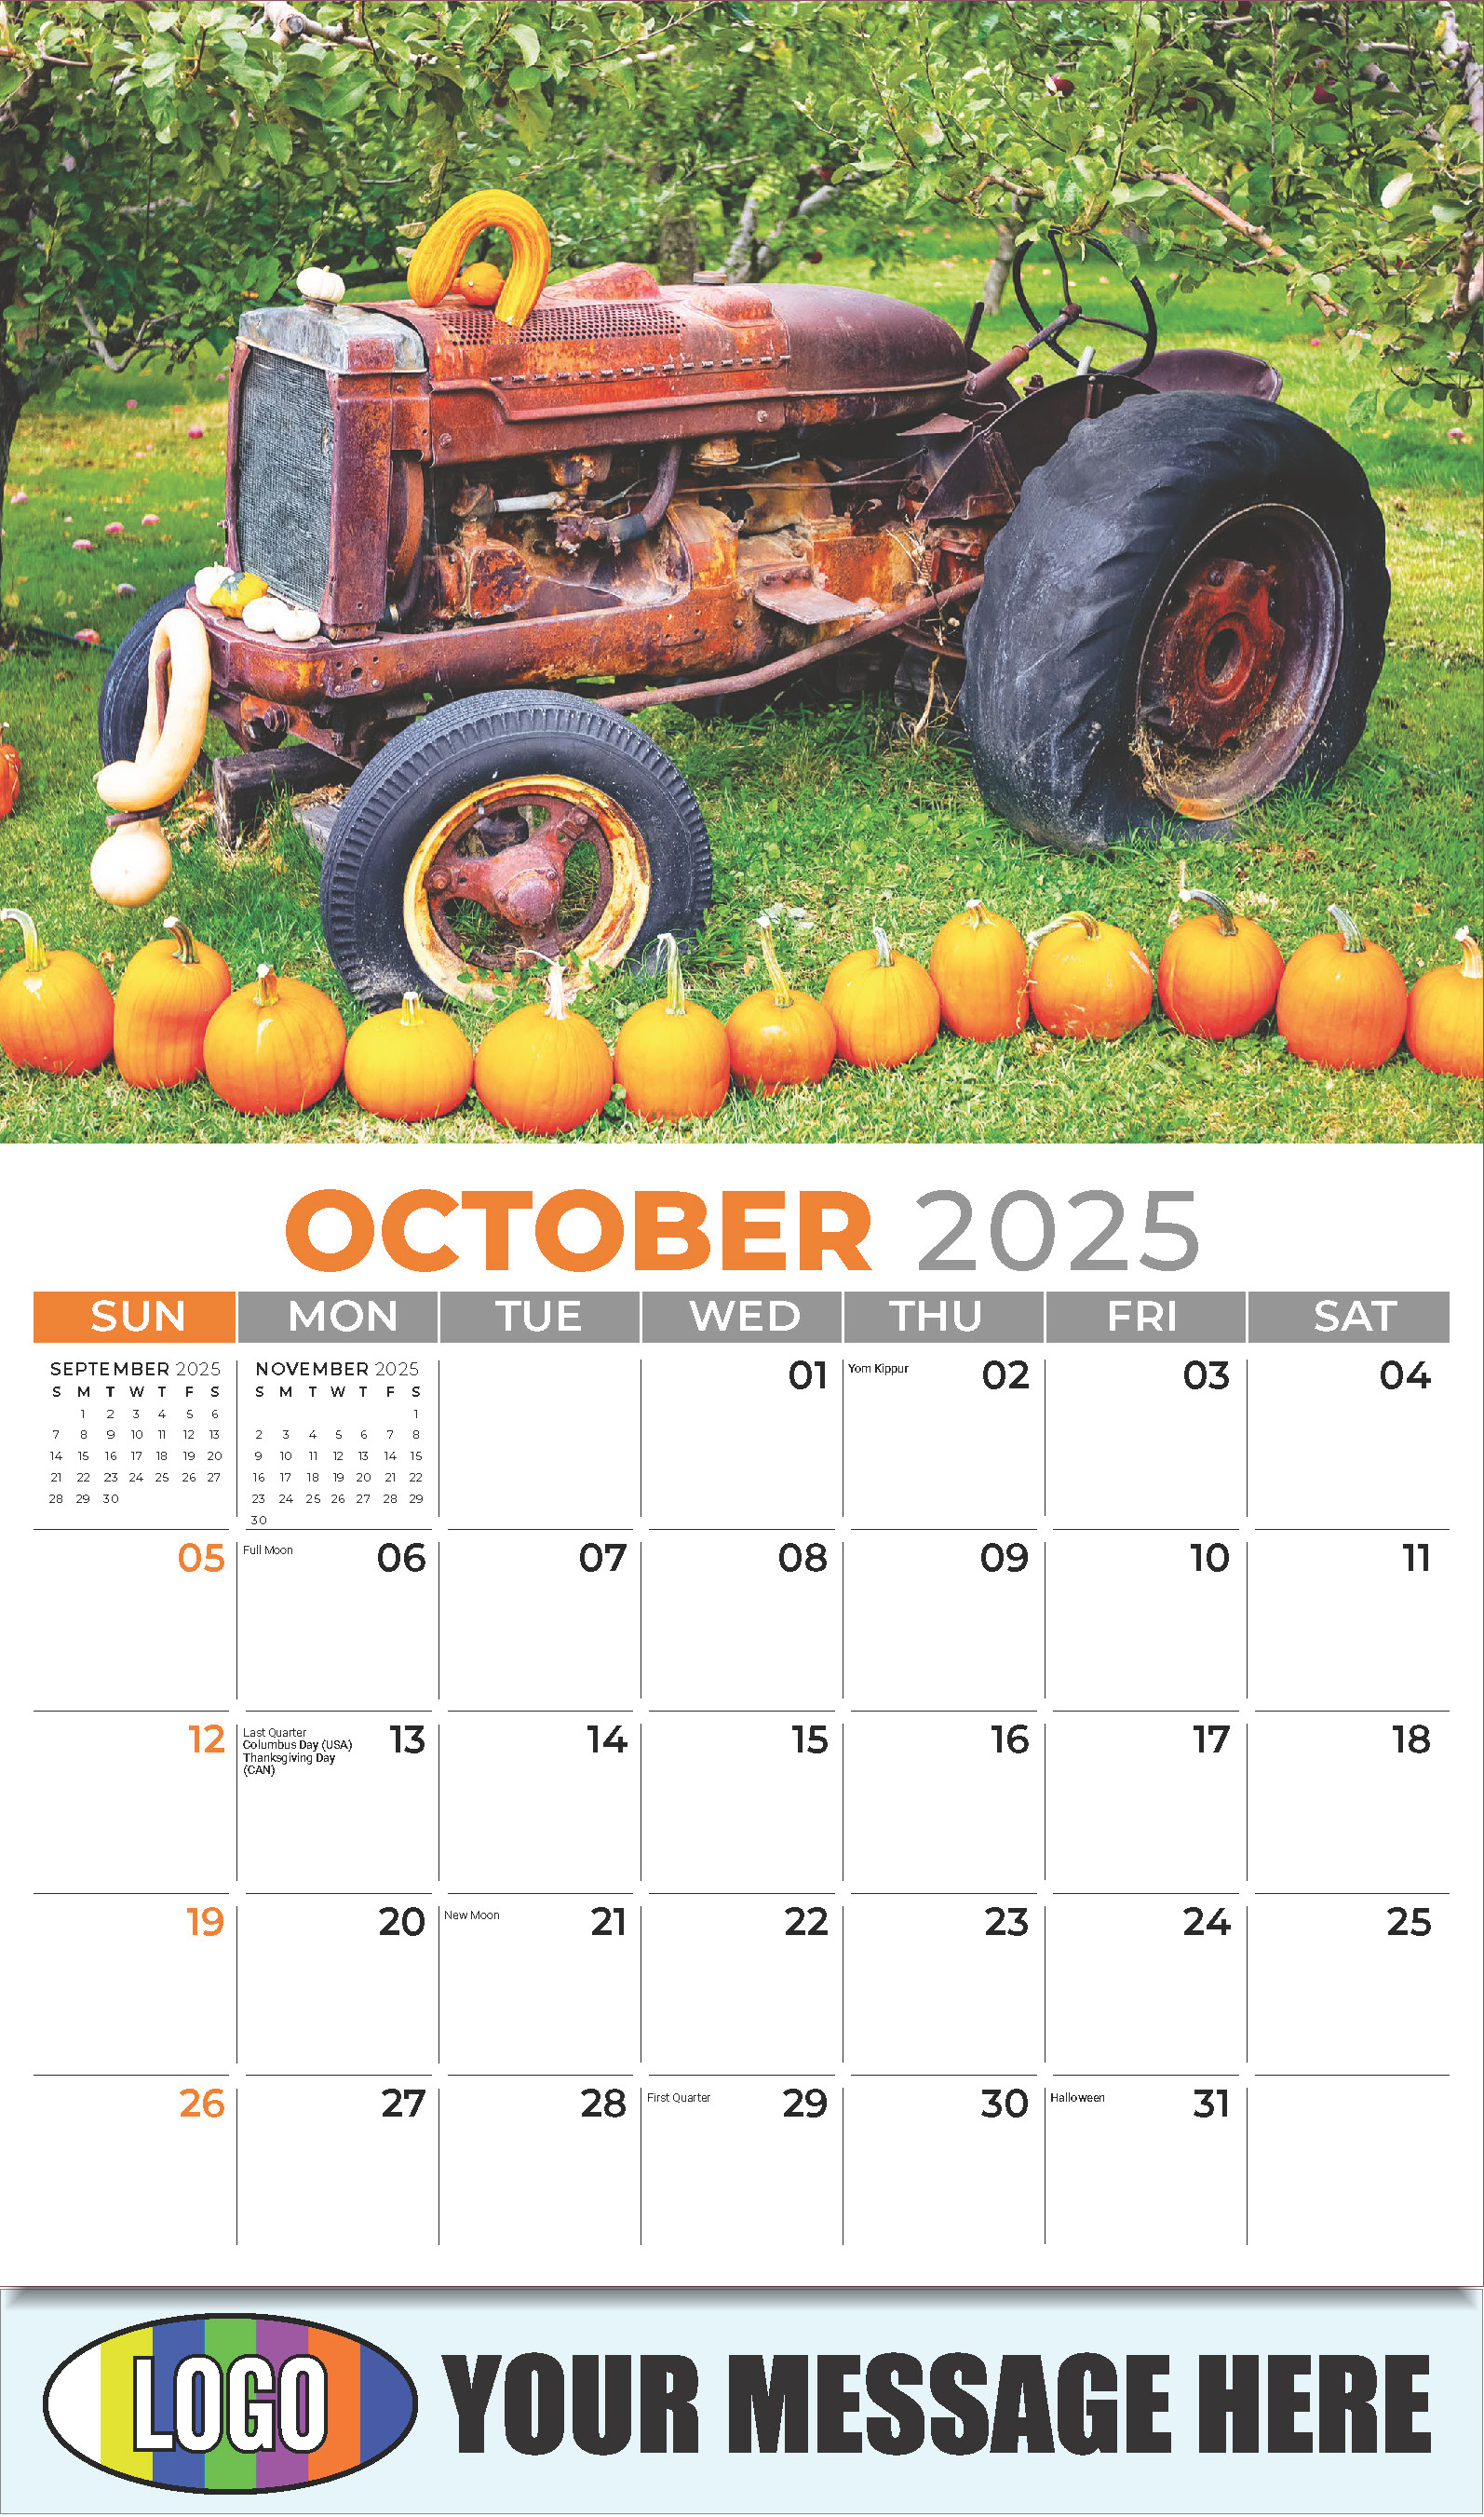 Country Spirit 2025 Business Advertising Calendar - October